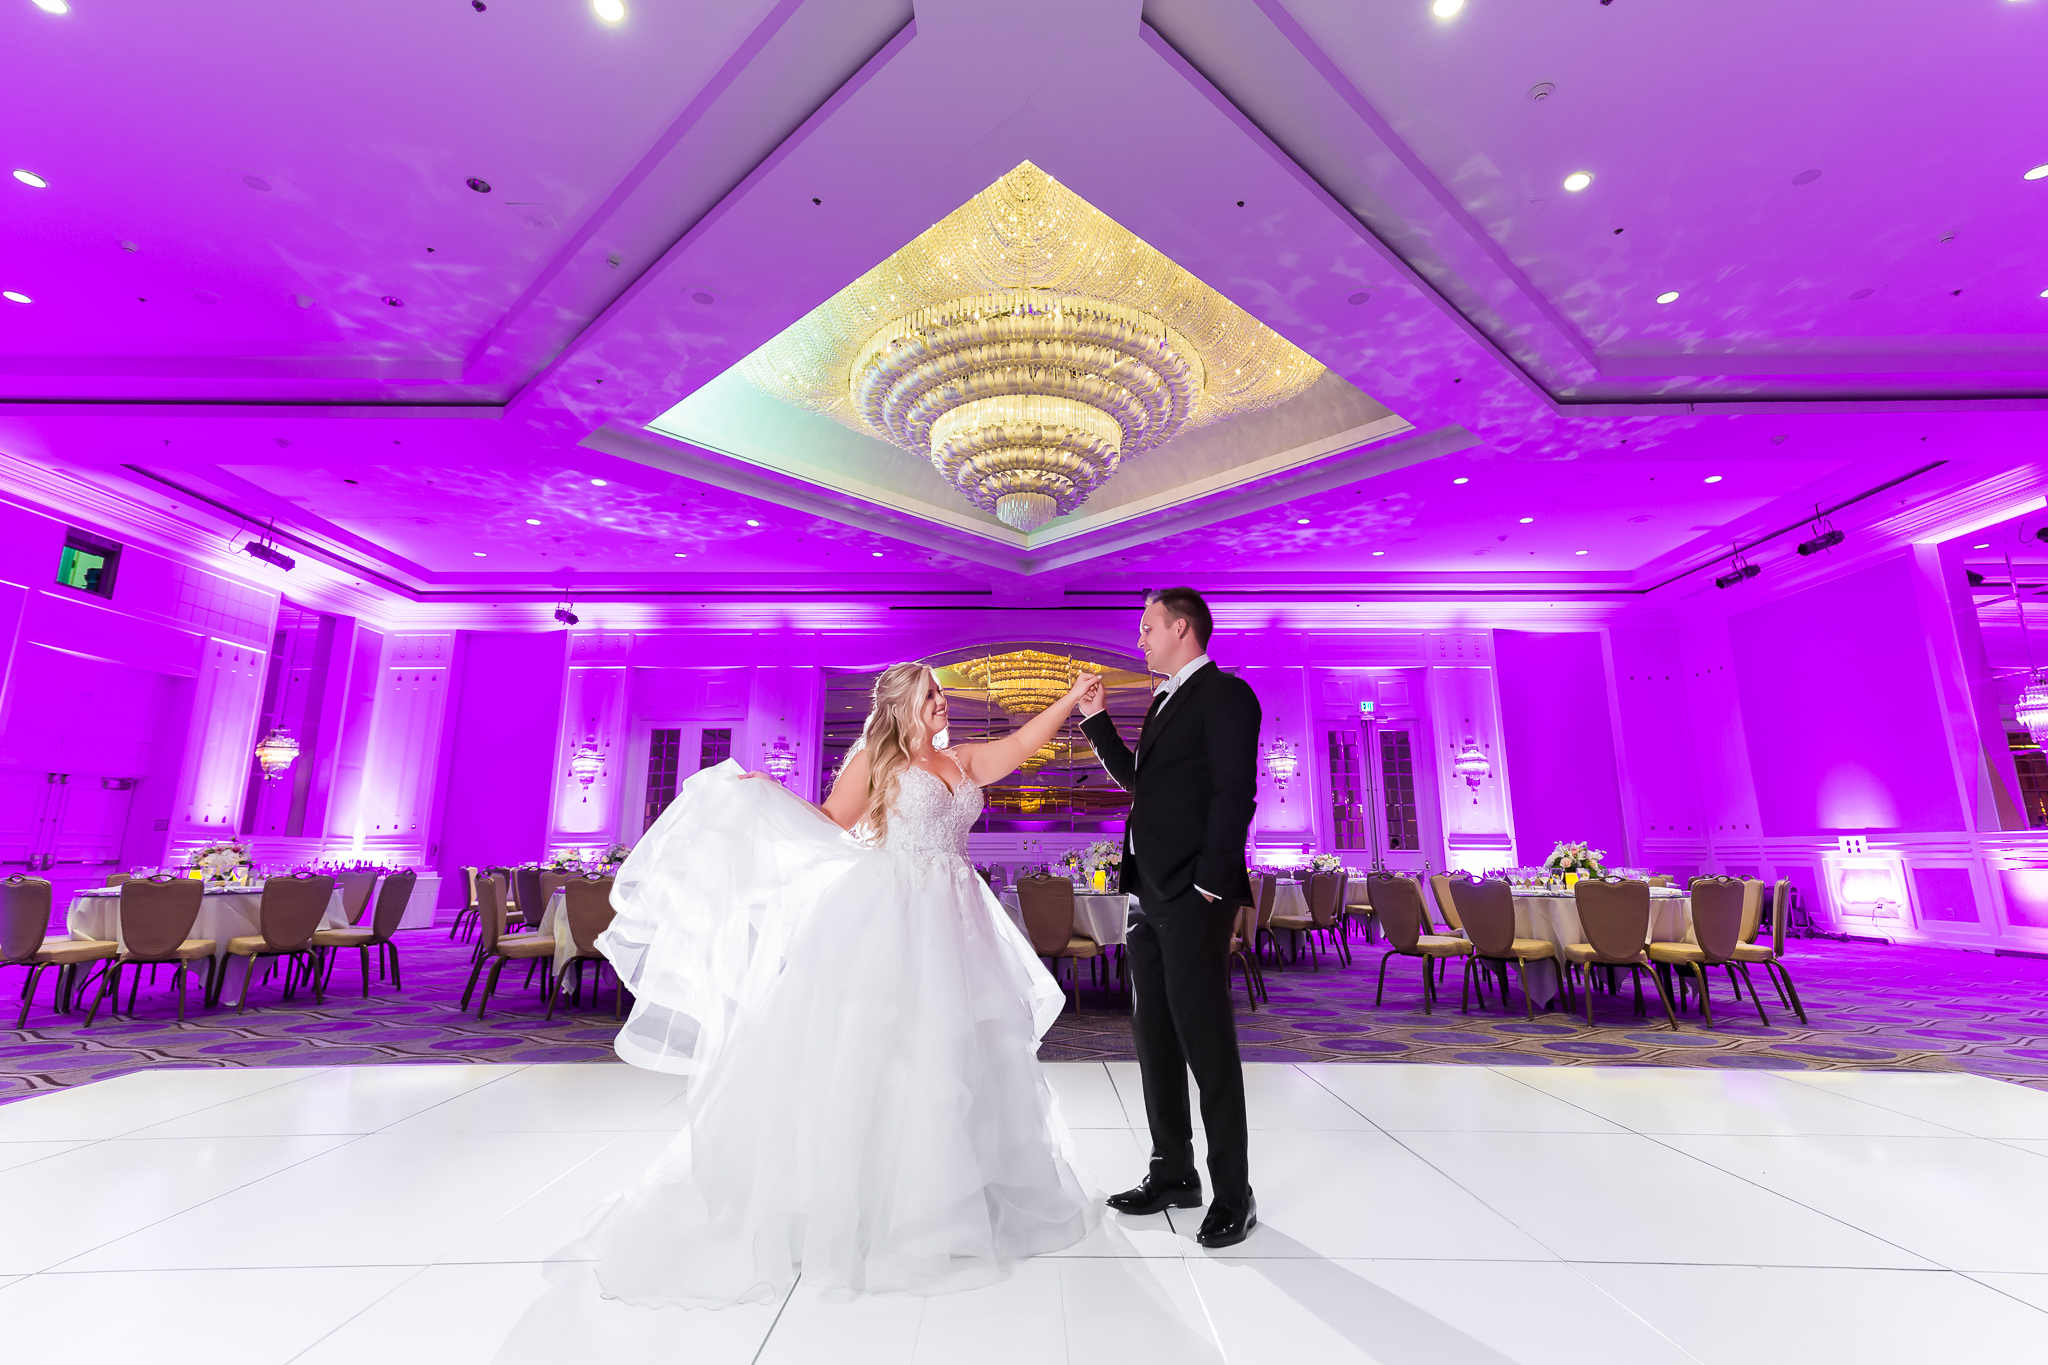  First dance in ballroom at Sheraton Universal Hotel Wedding